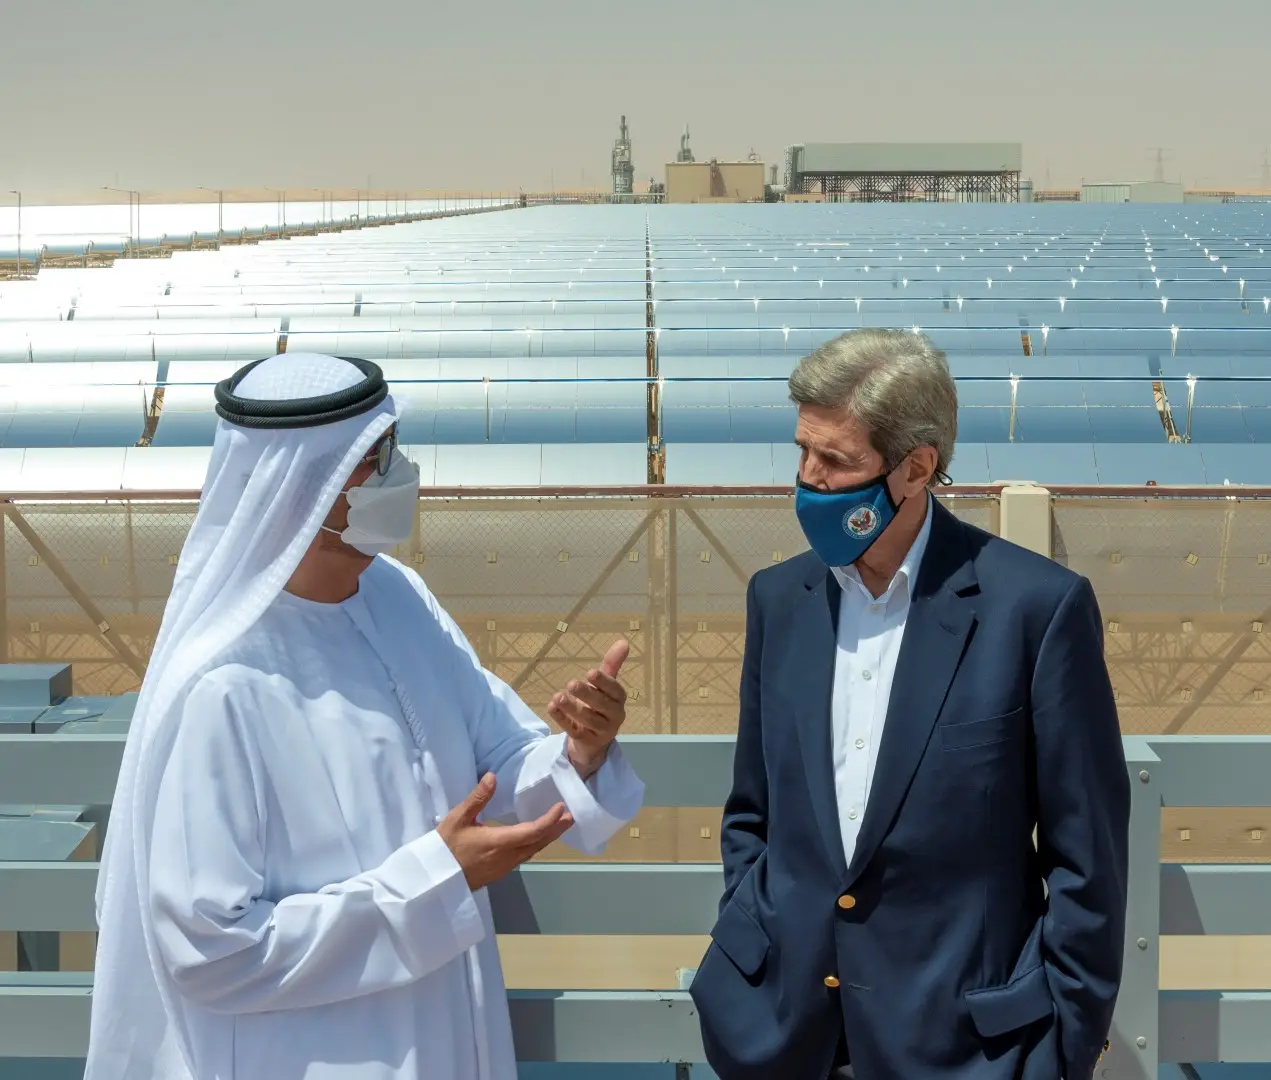 UAE Regional Climate Dialogue